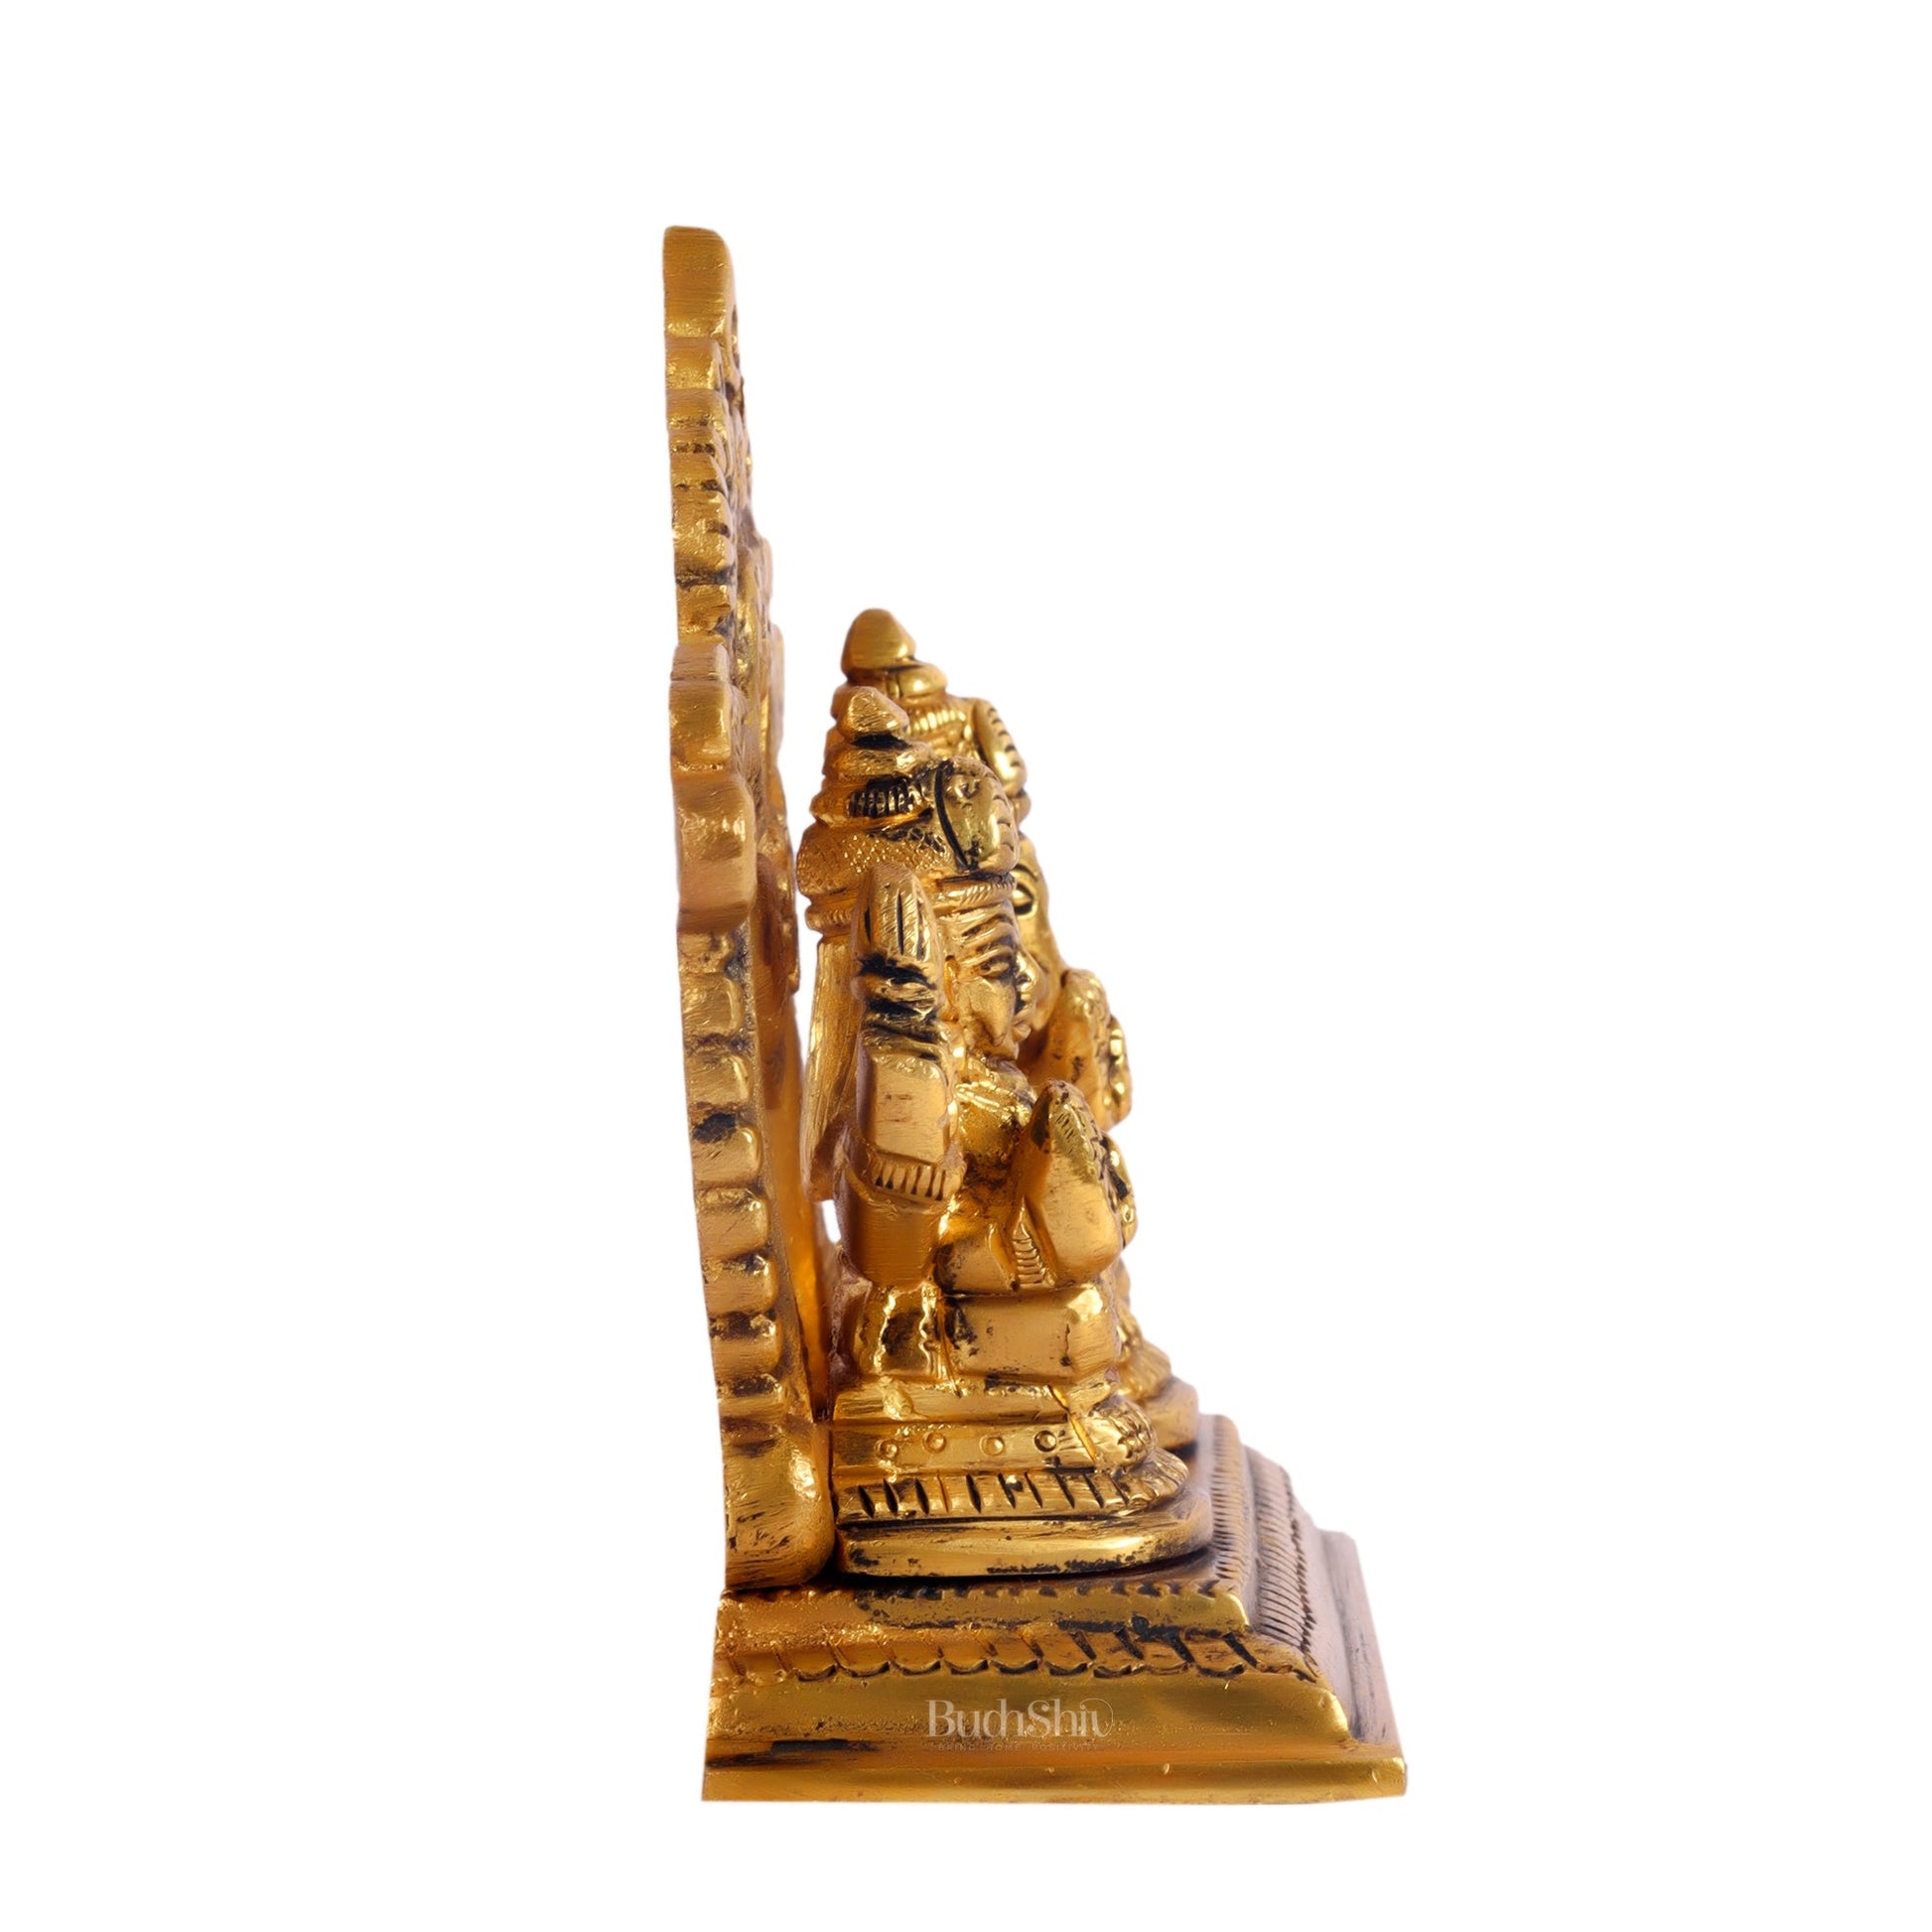 Brass small Ganesh Lakshmi idol with prabhavali frame 3.5" - Budhshiv.com